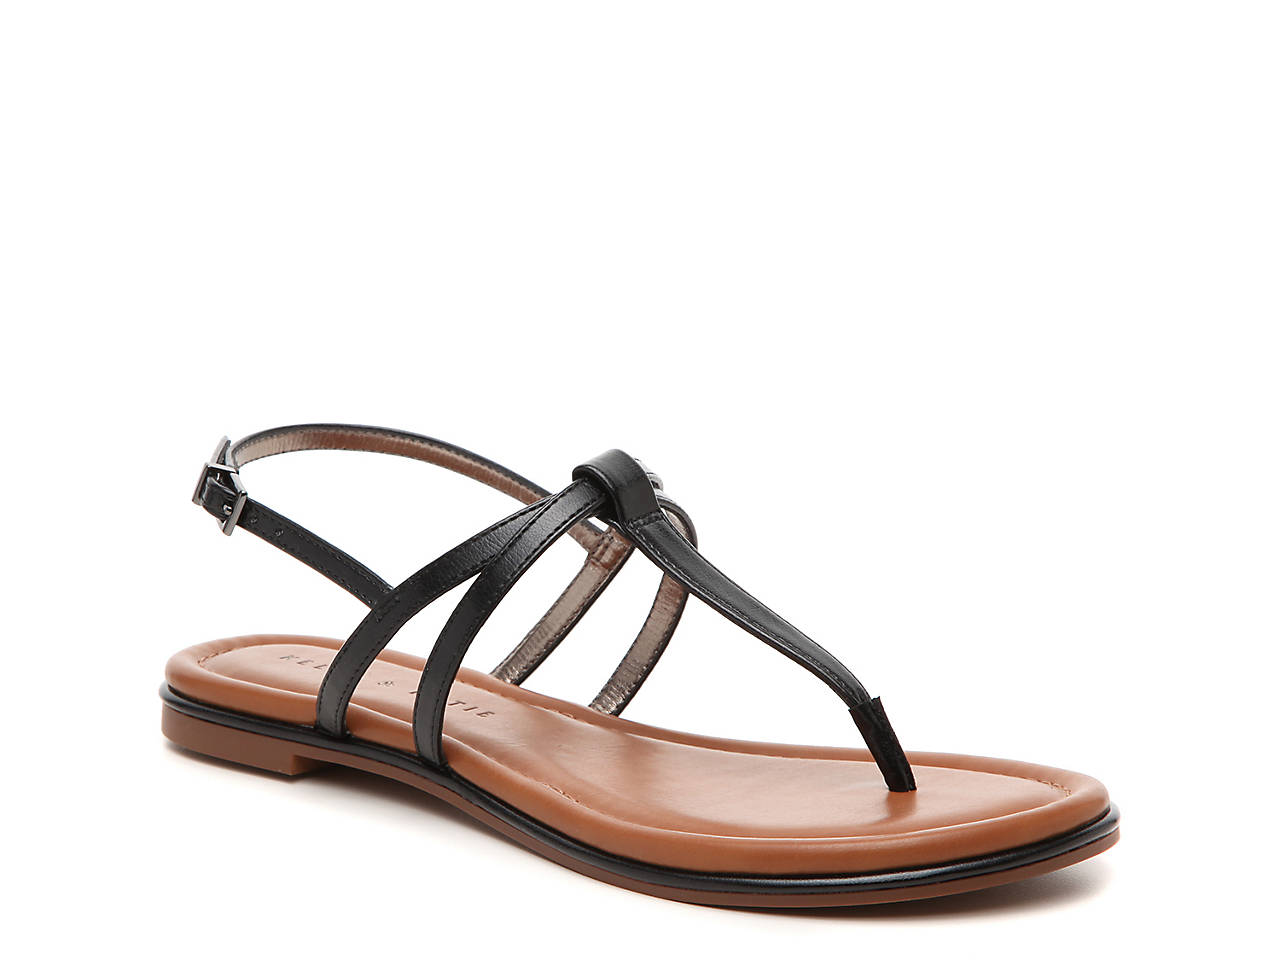 Cute sandals for wide flat feet?